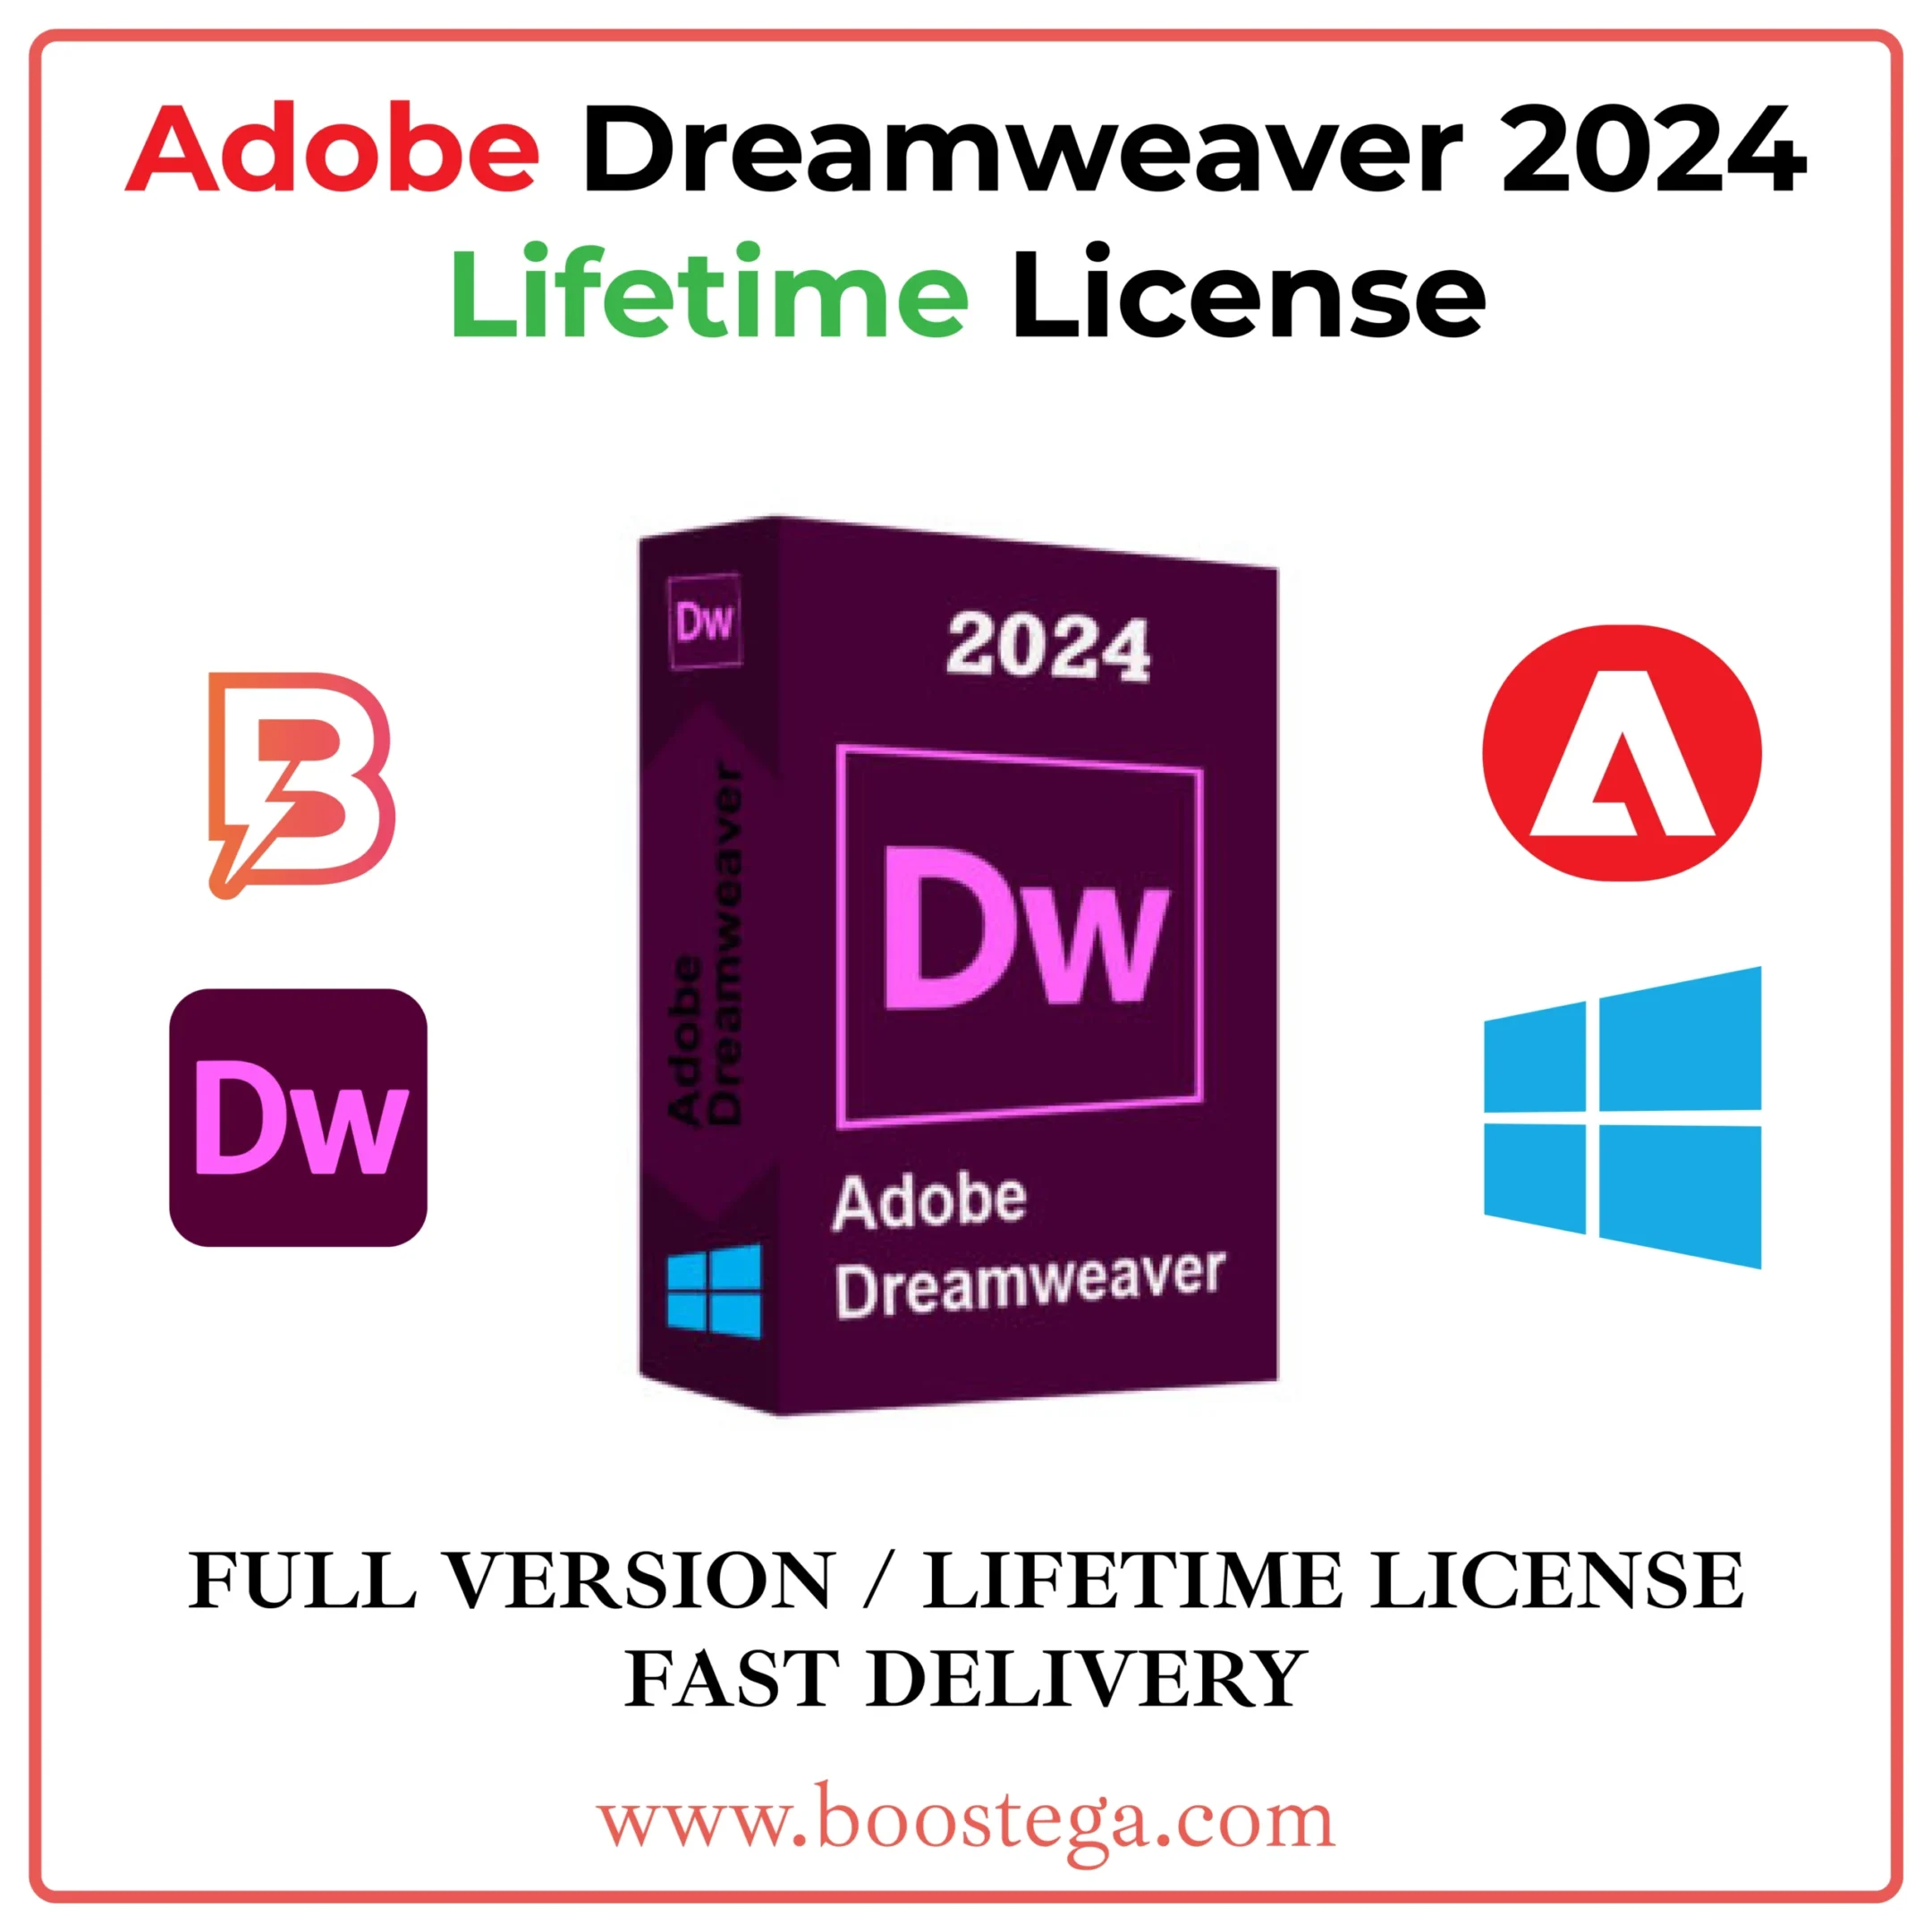 Buy Adobe Dreamweaver 2024 Lifetime License